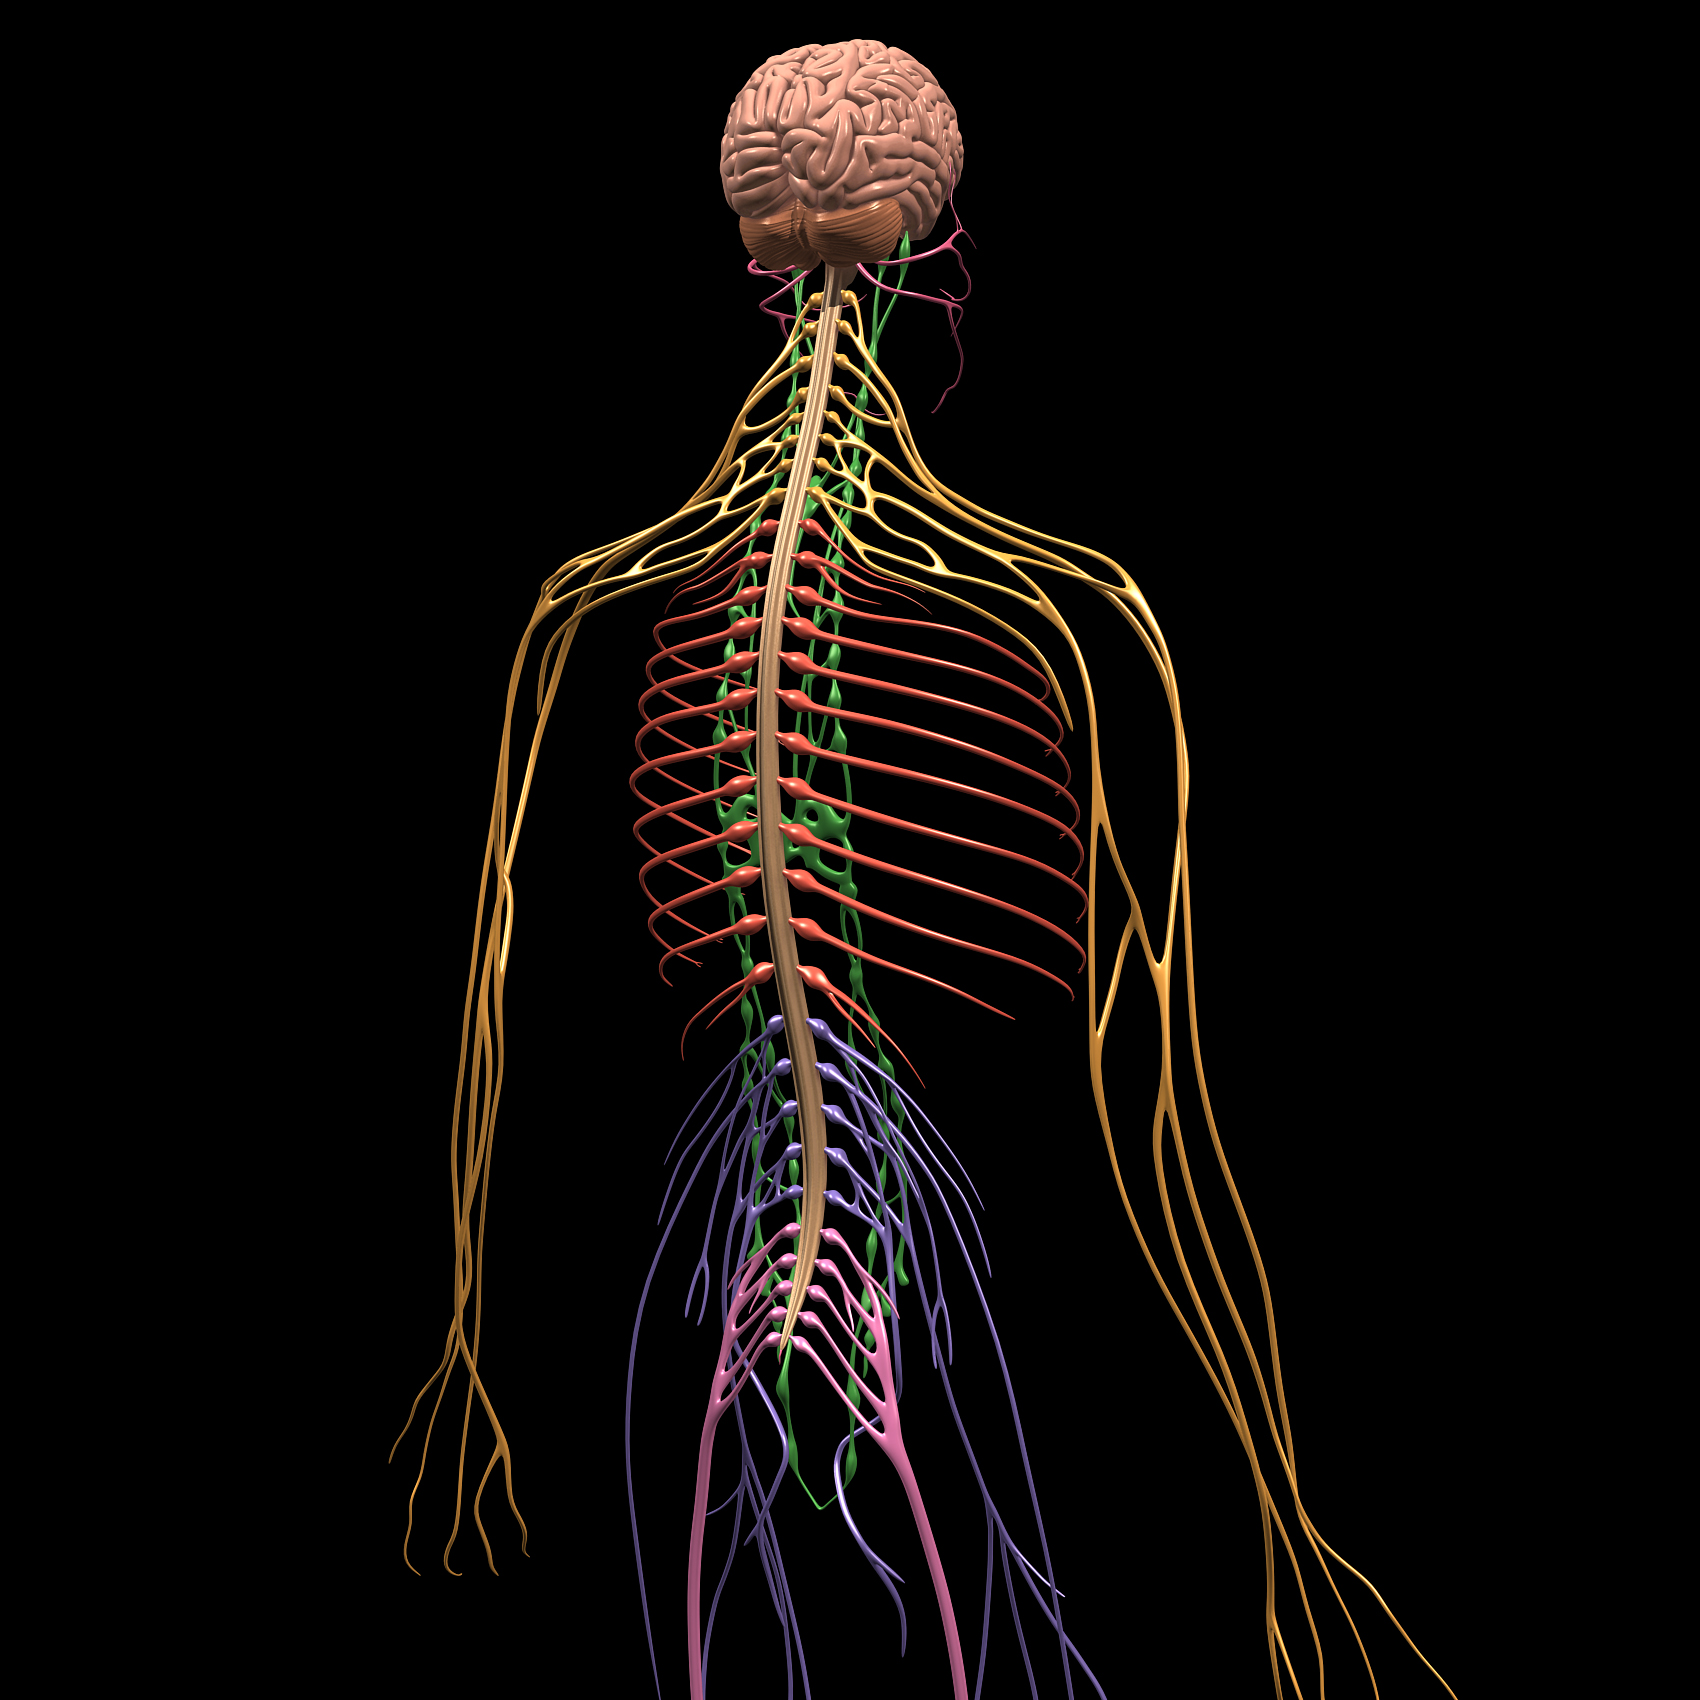 Brain & Nervous System – MotionCow